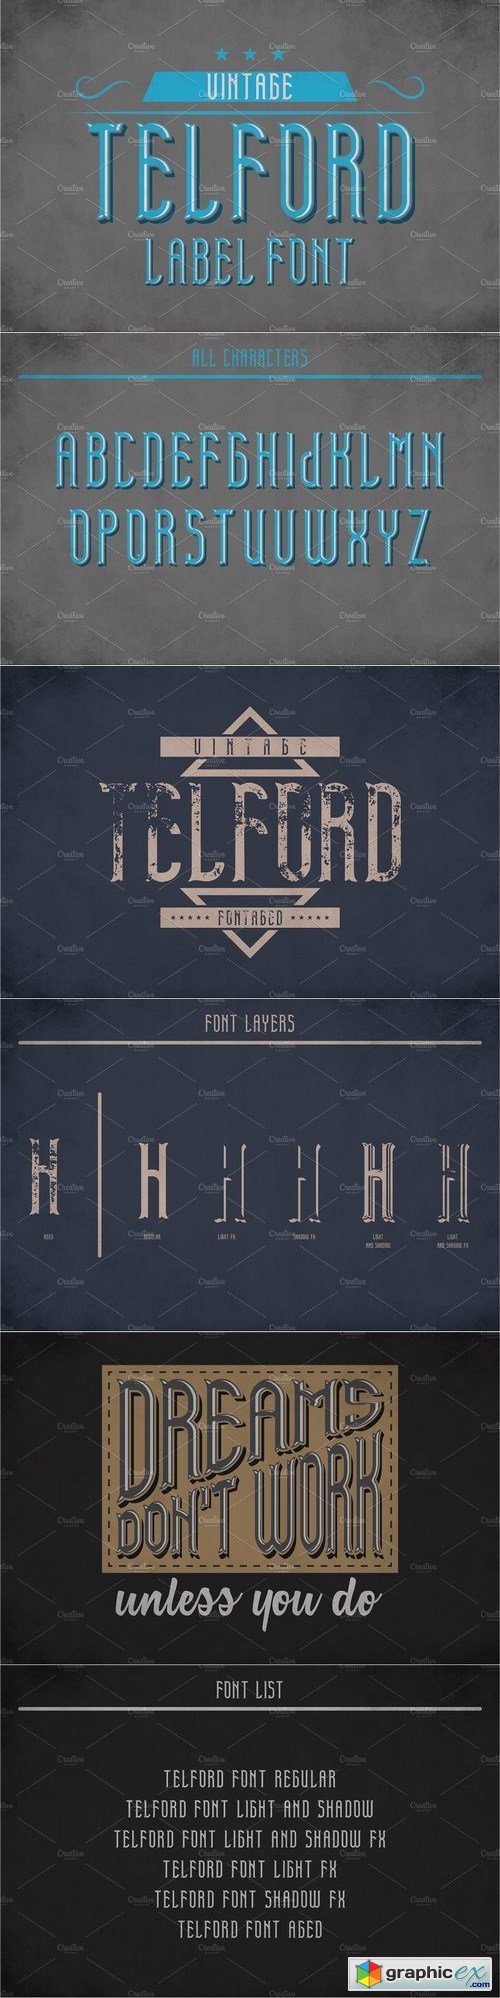 Telford Vintage Label Typeface 1877514